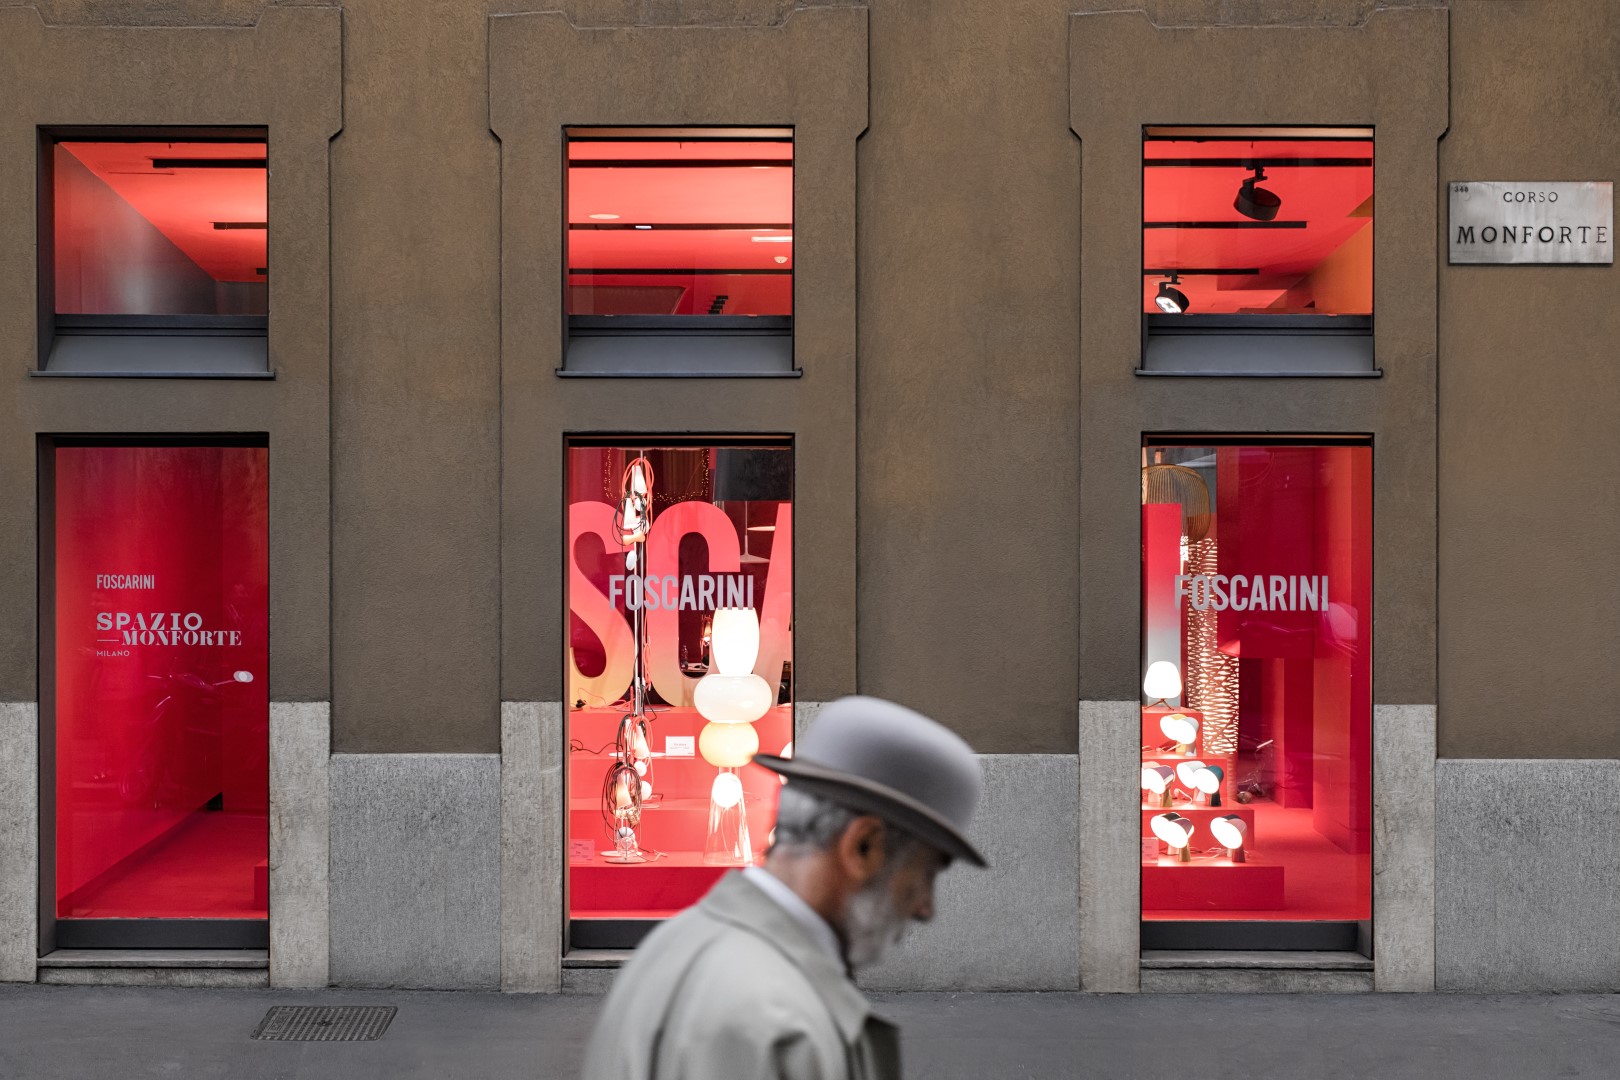 Milano Design Week 2019 Foscarini